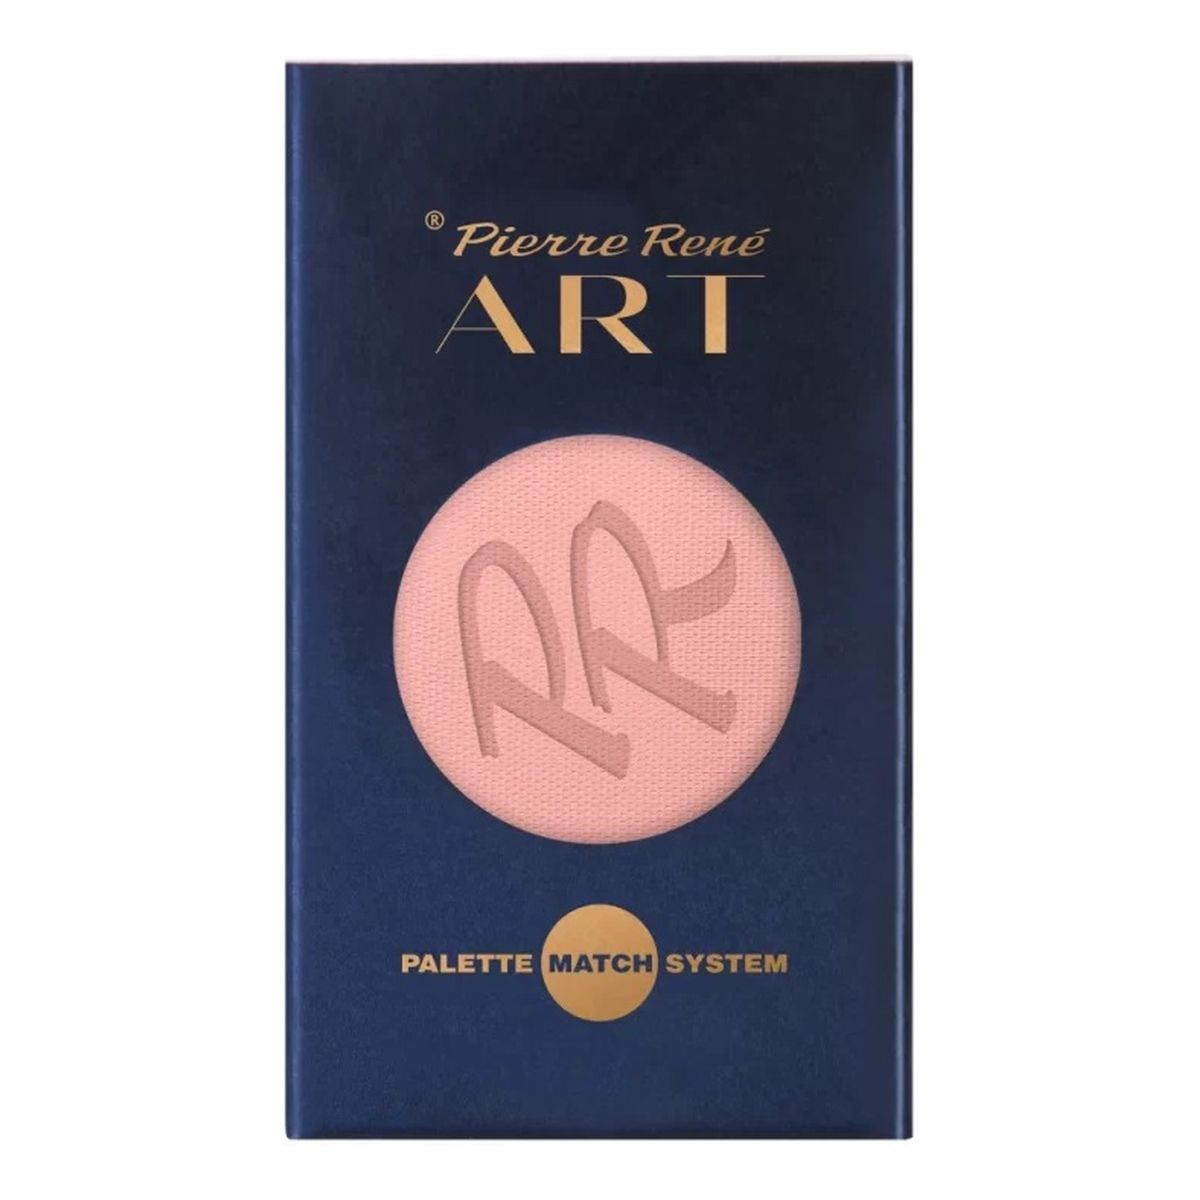 Pierre Rene Art palette match system róż do palety magnetycznej 03 5,5 g 5.5g